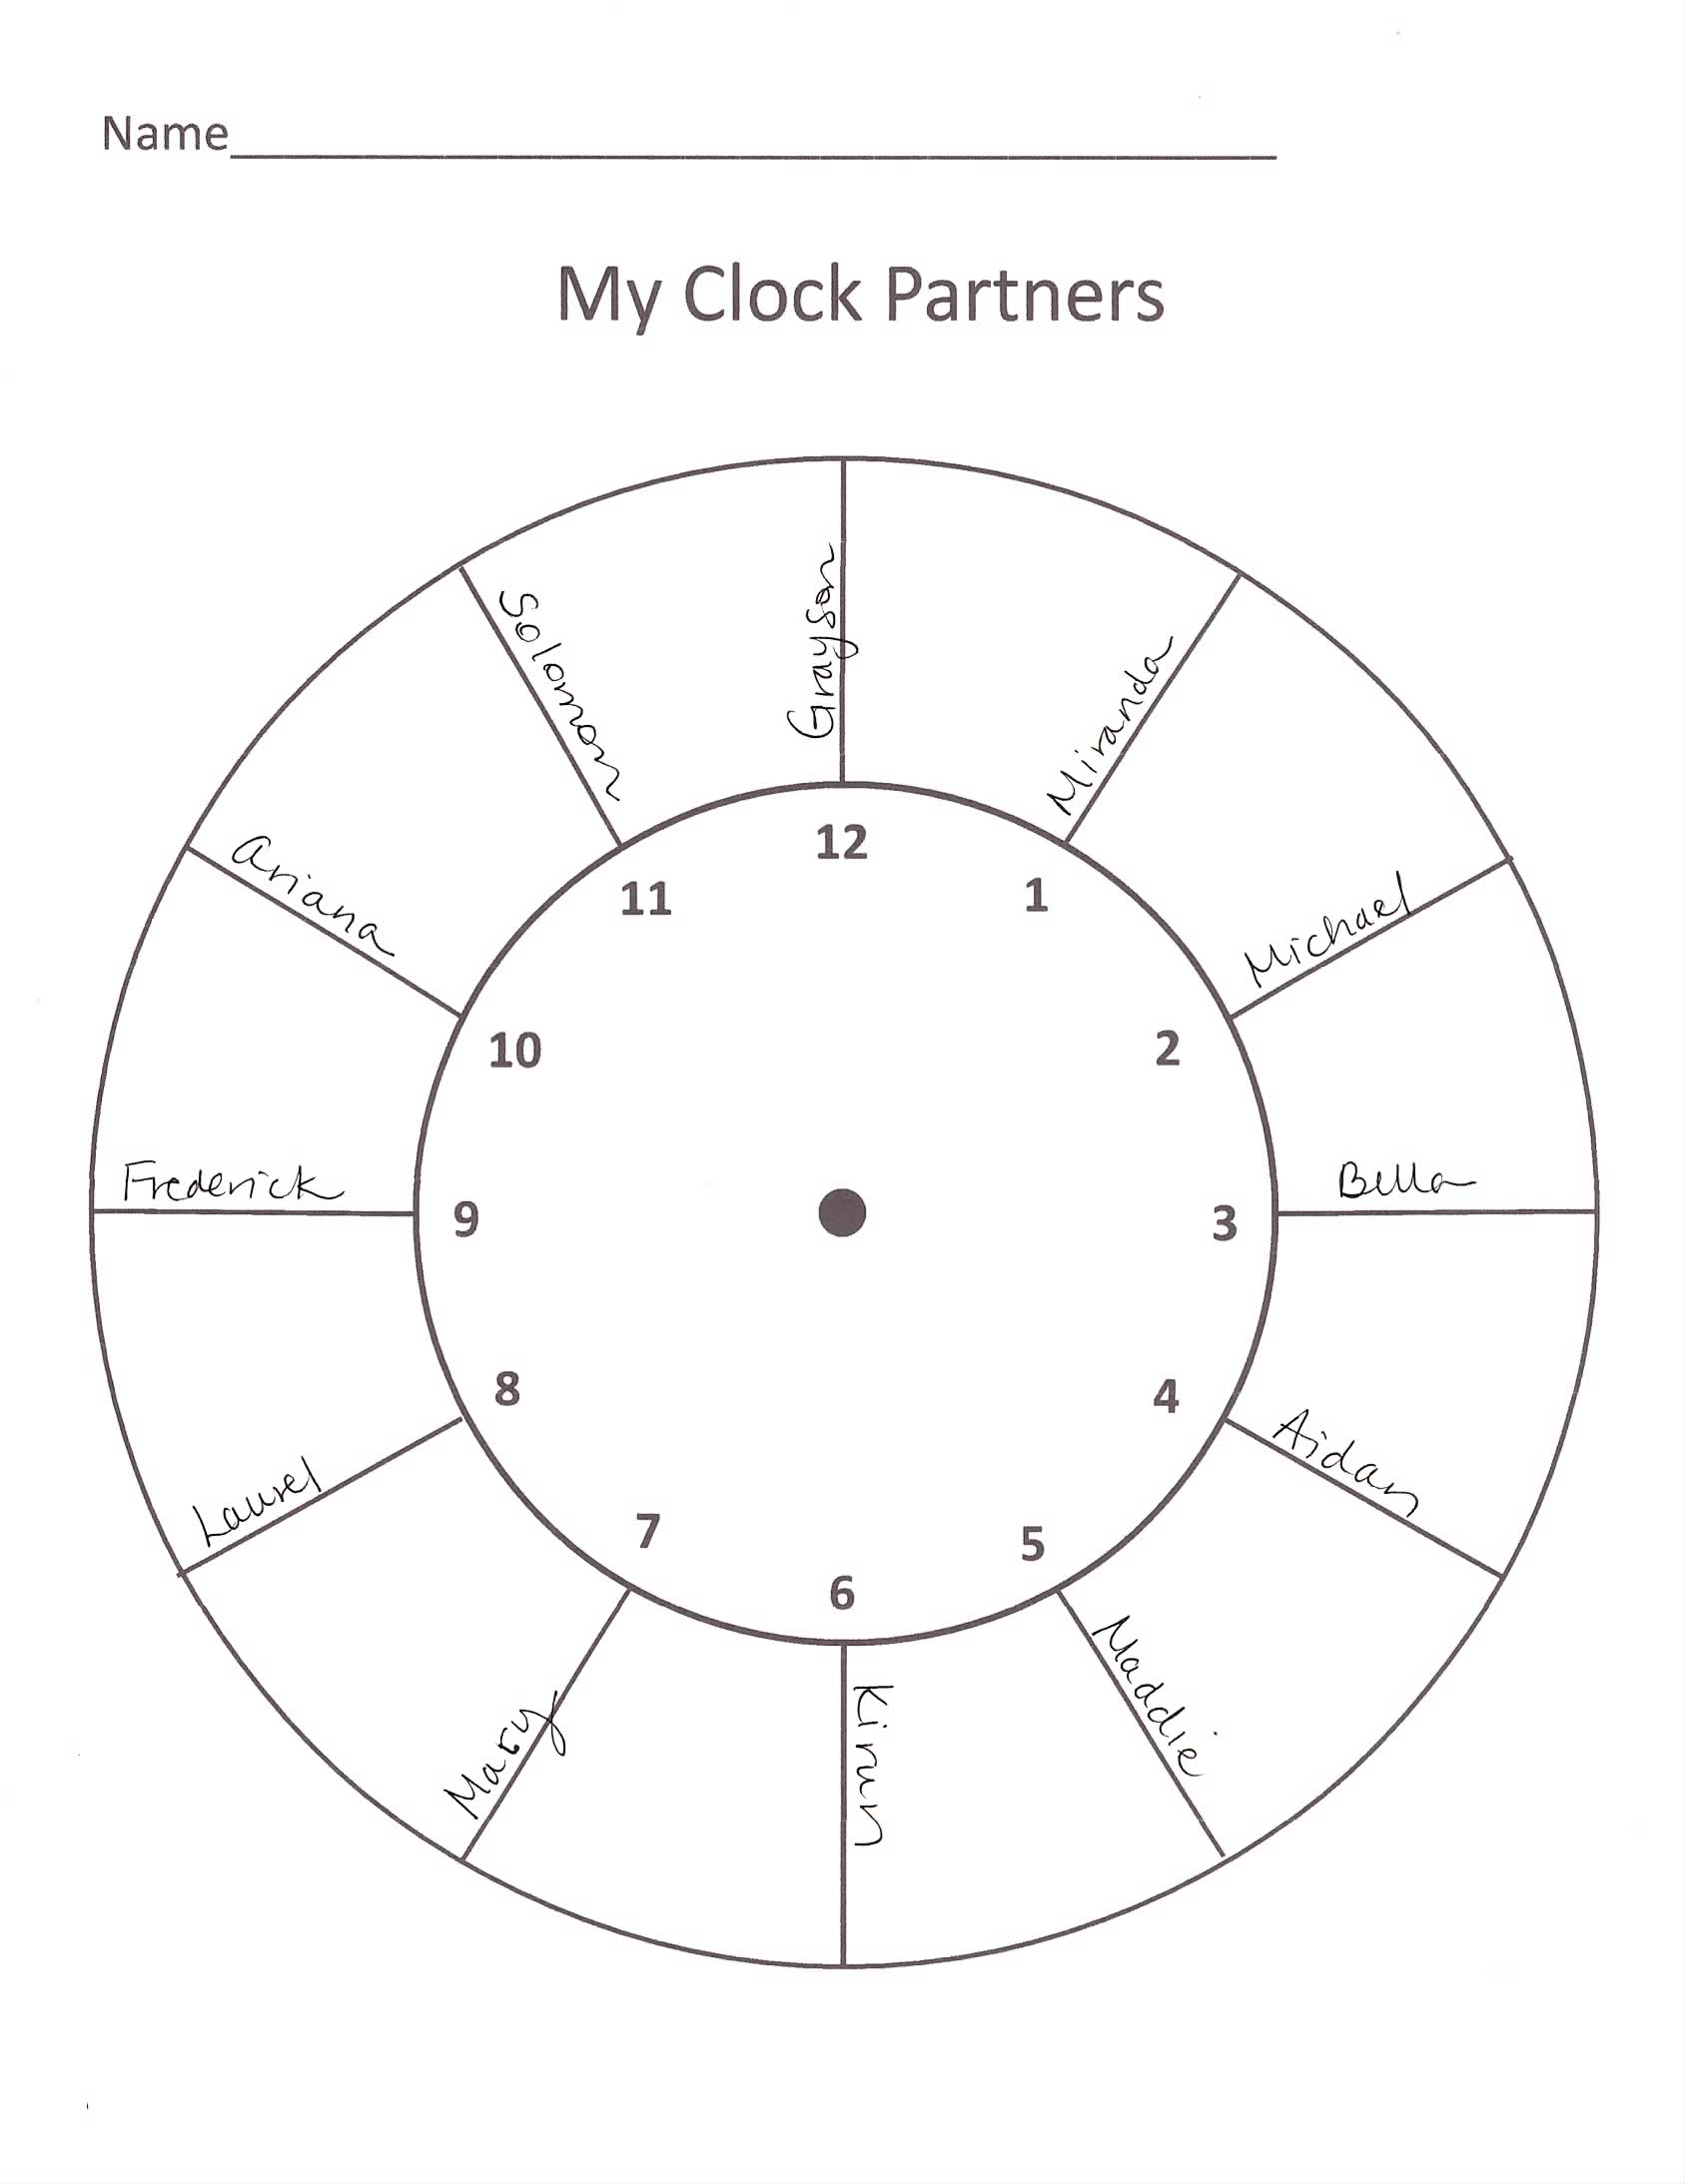 Clock Partner Template Free